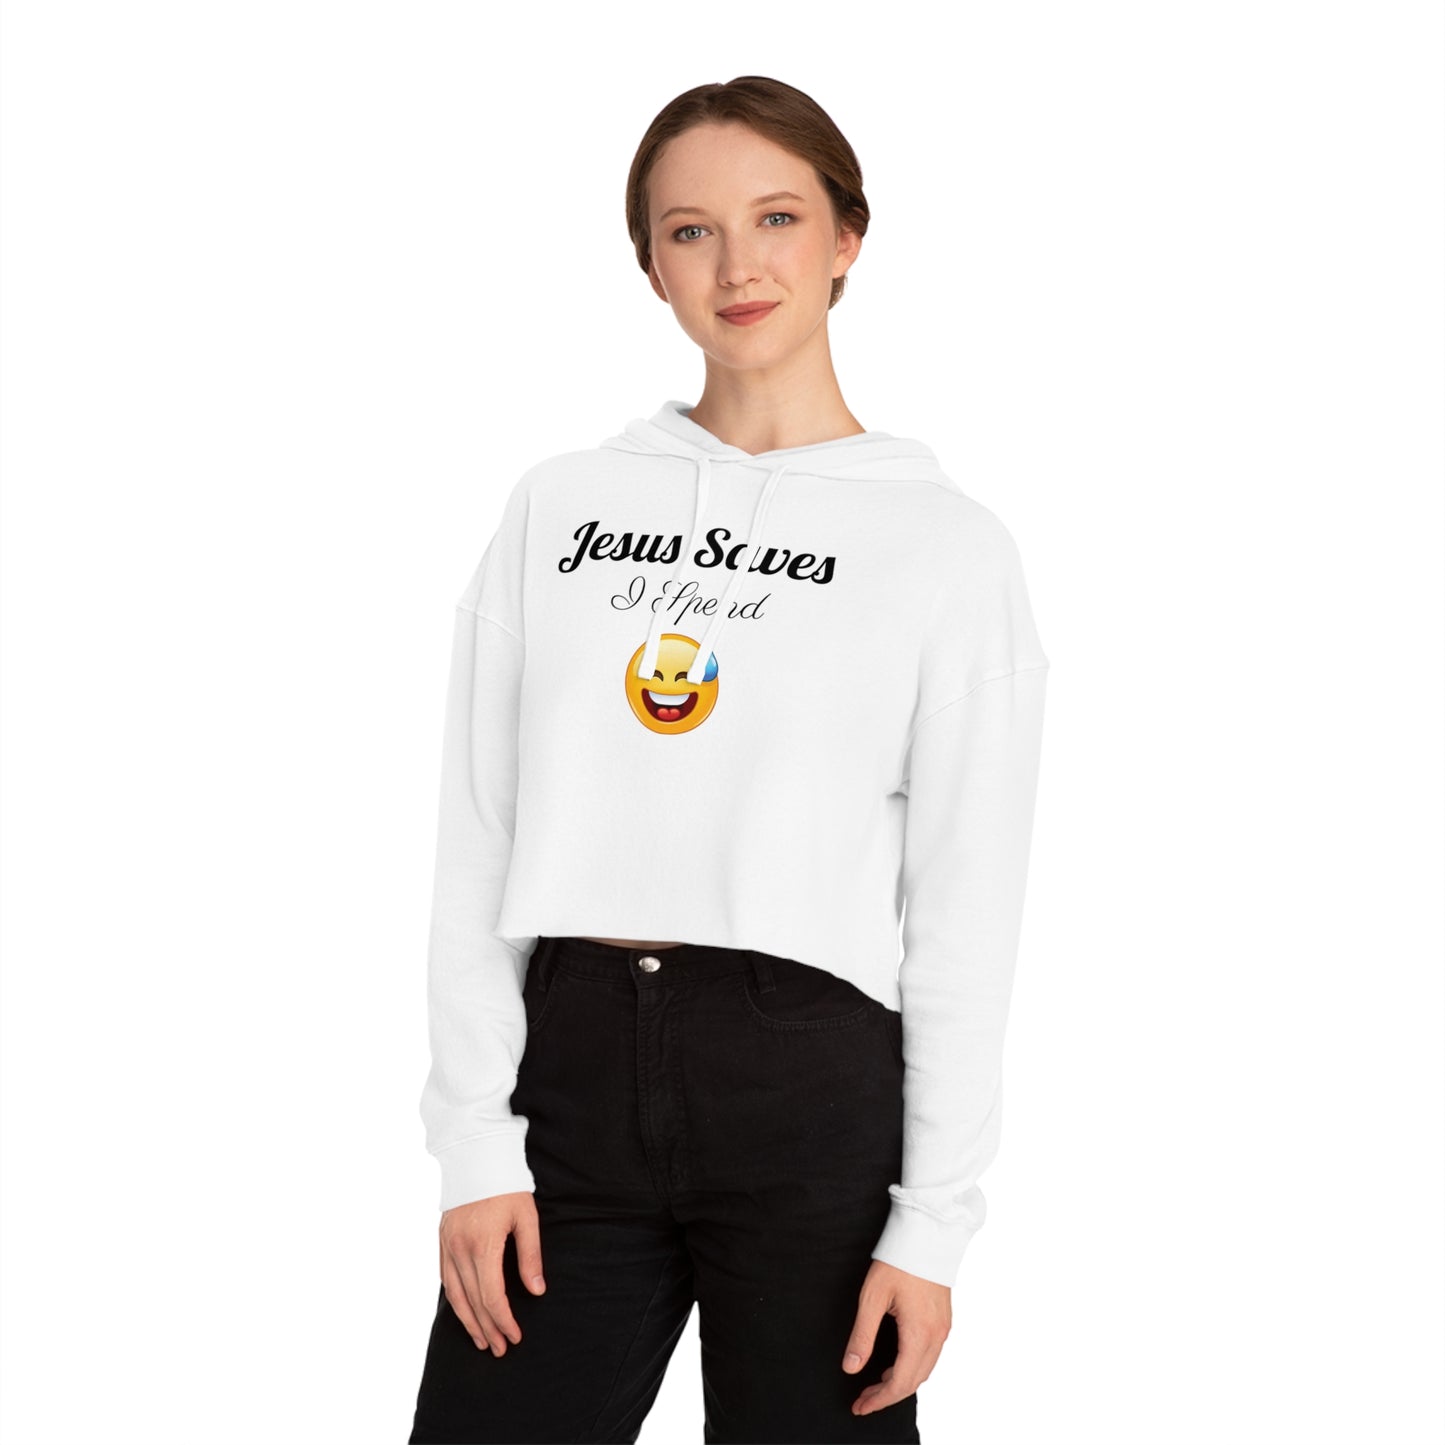 DM Women’s Graphic Cropped Hooded Sweatshirt